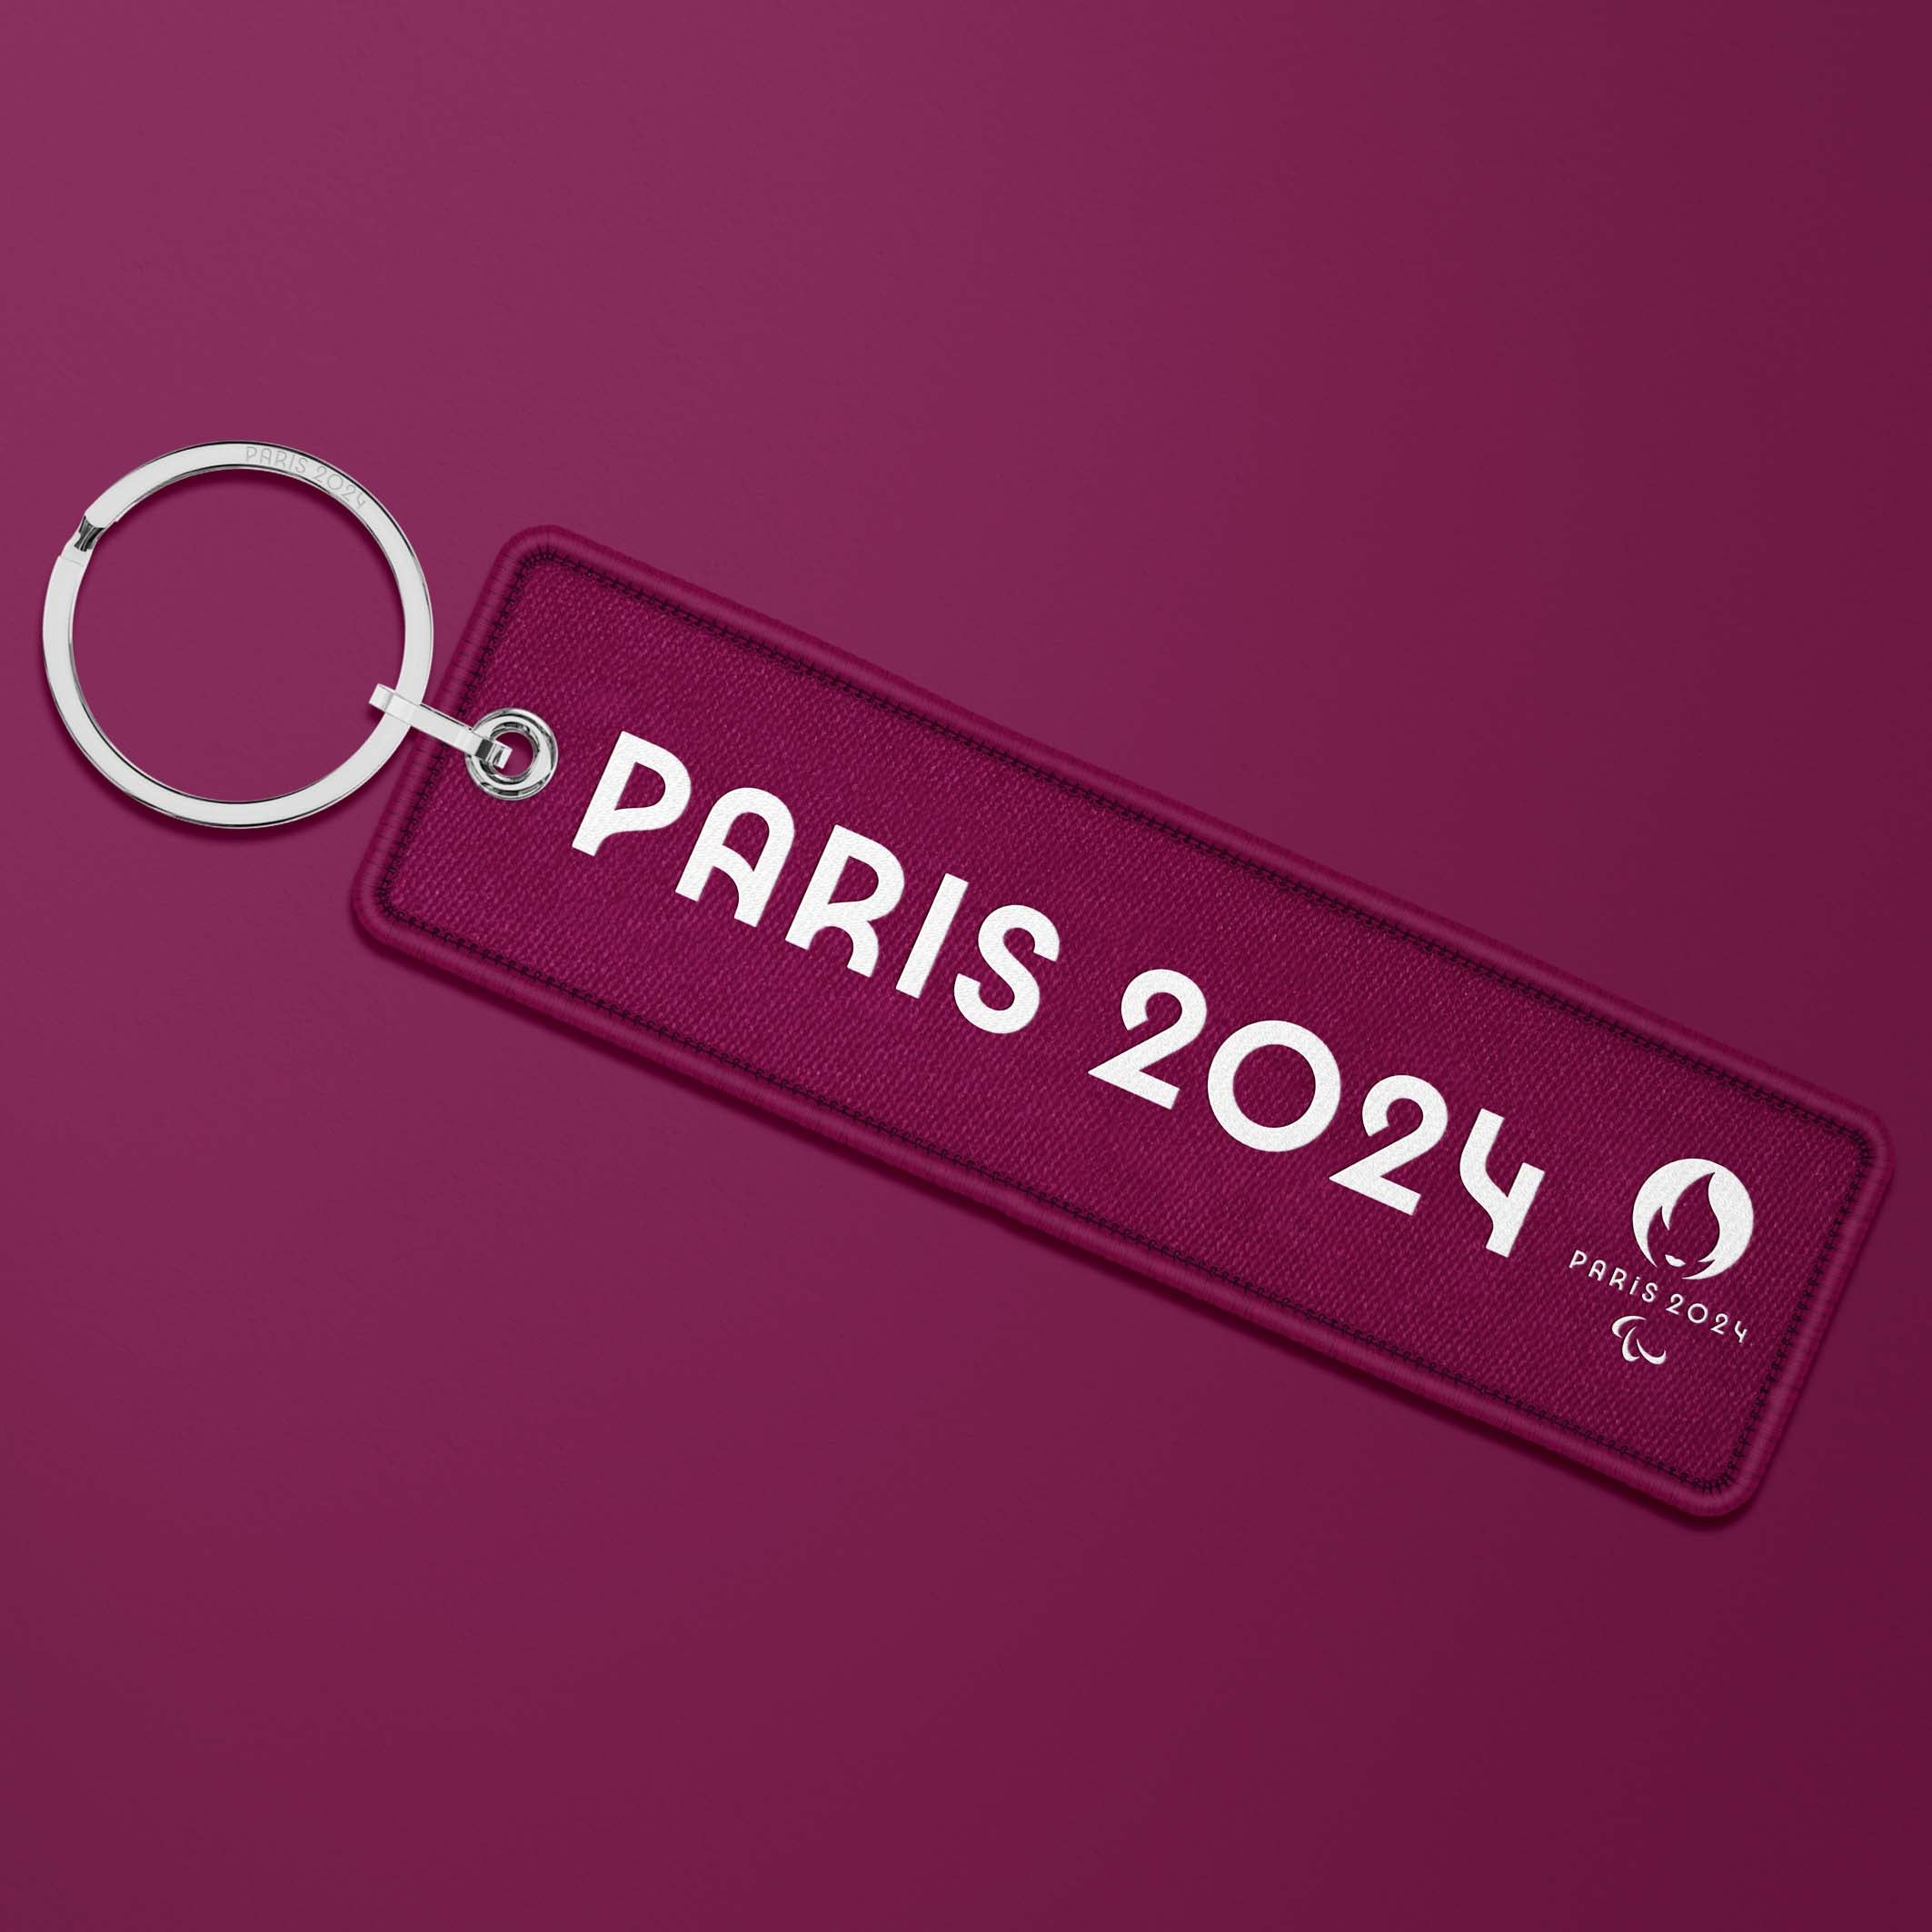 Paris 2024 Burgundy flame key ring - Armchair basketball